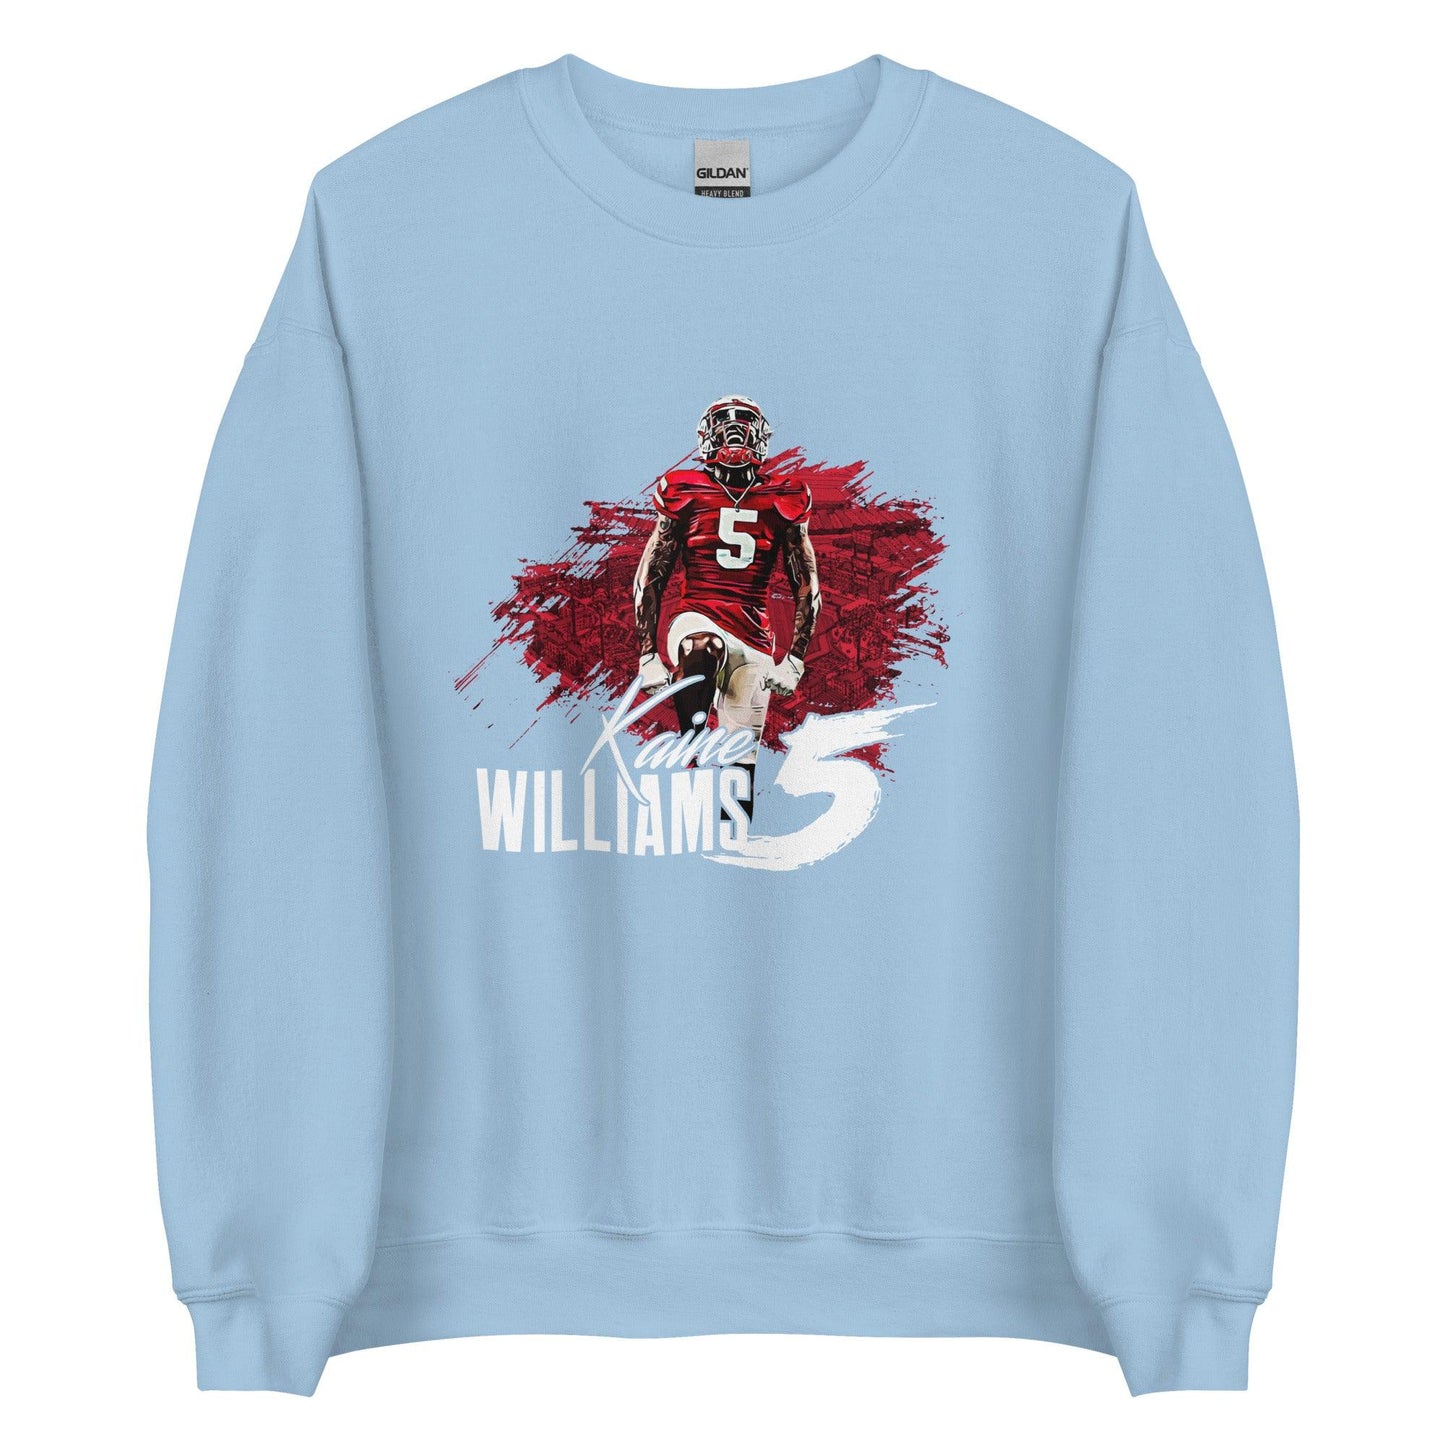 Kaine Williams "We Ready" Sweatshirt - Fan Arch